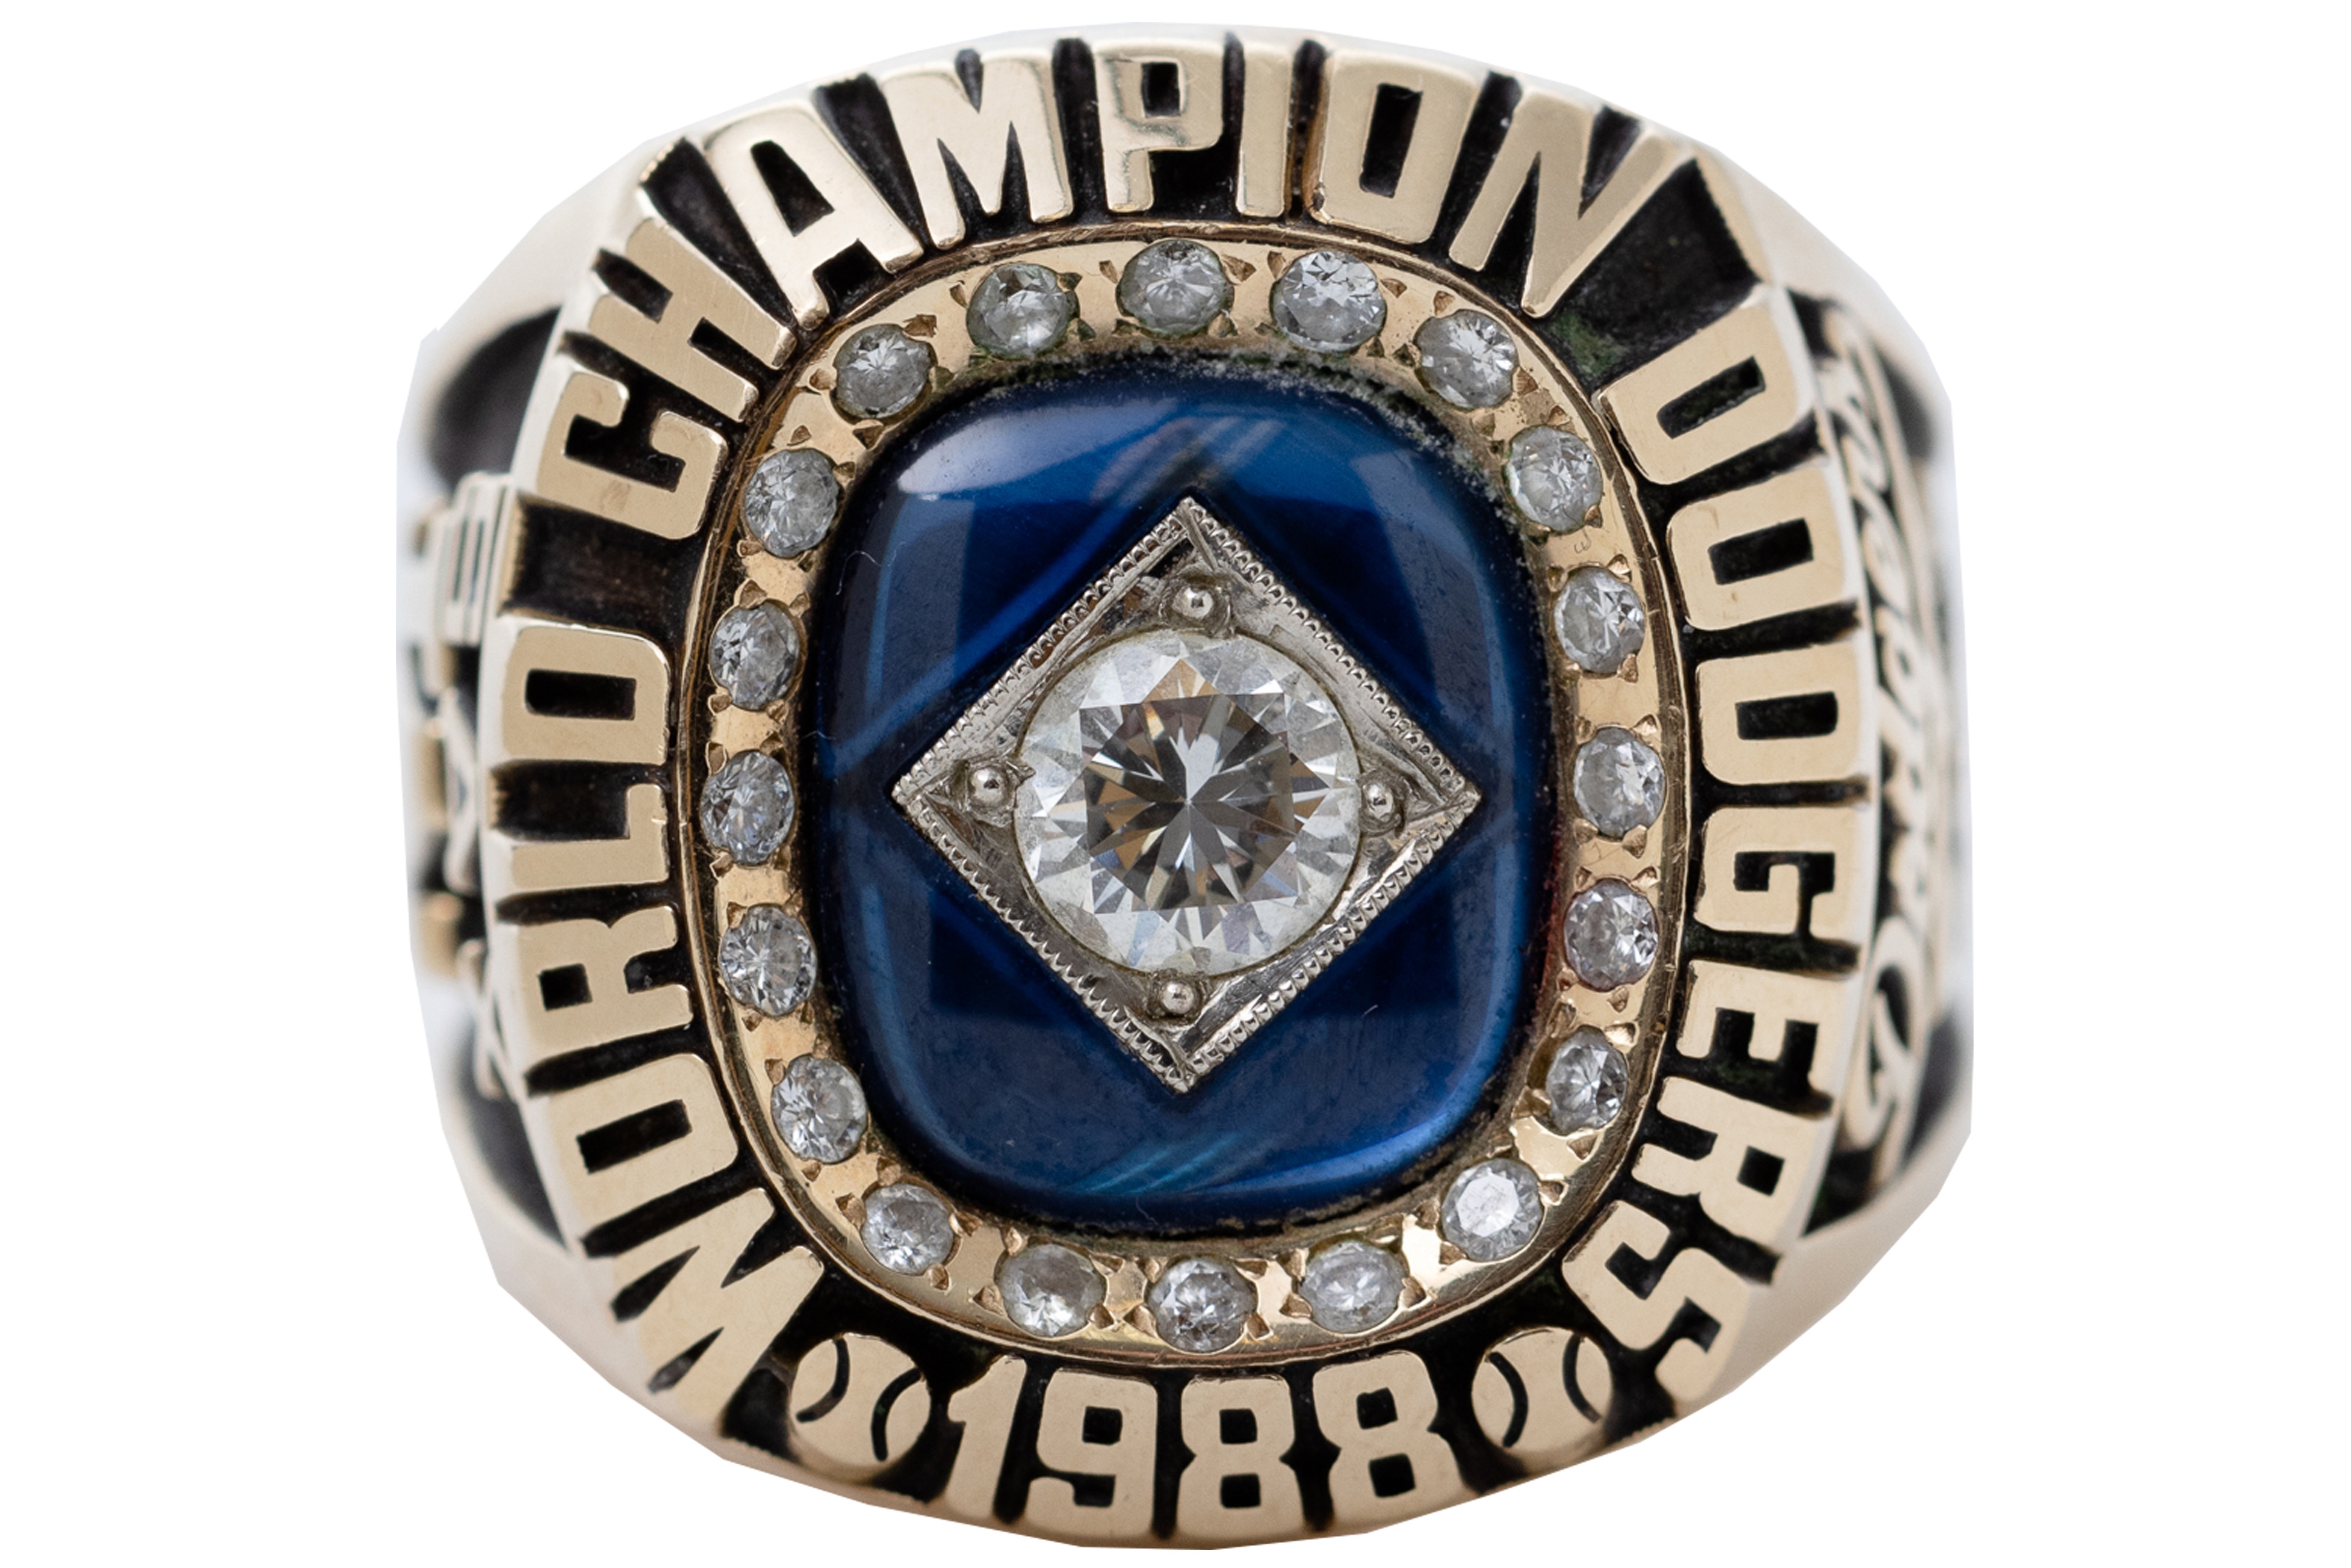 1988 Los Angeles Dodgers World Series Championship Ring -  www.championshipringclub.com